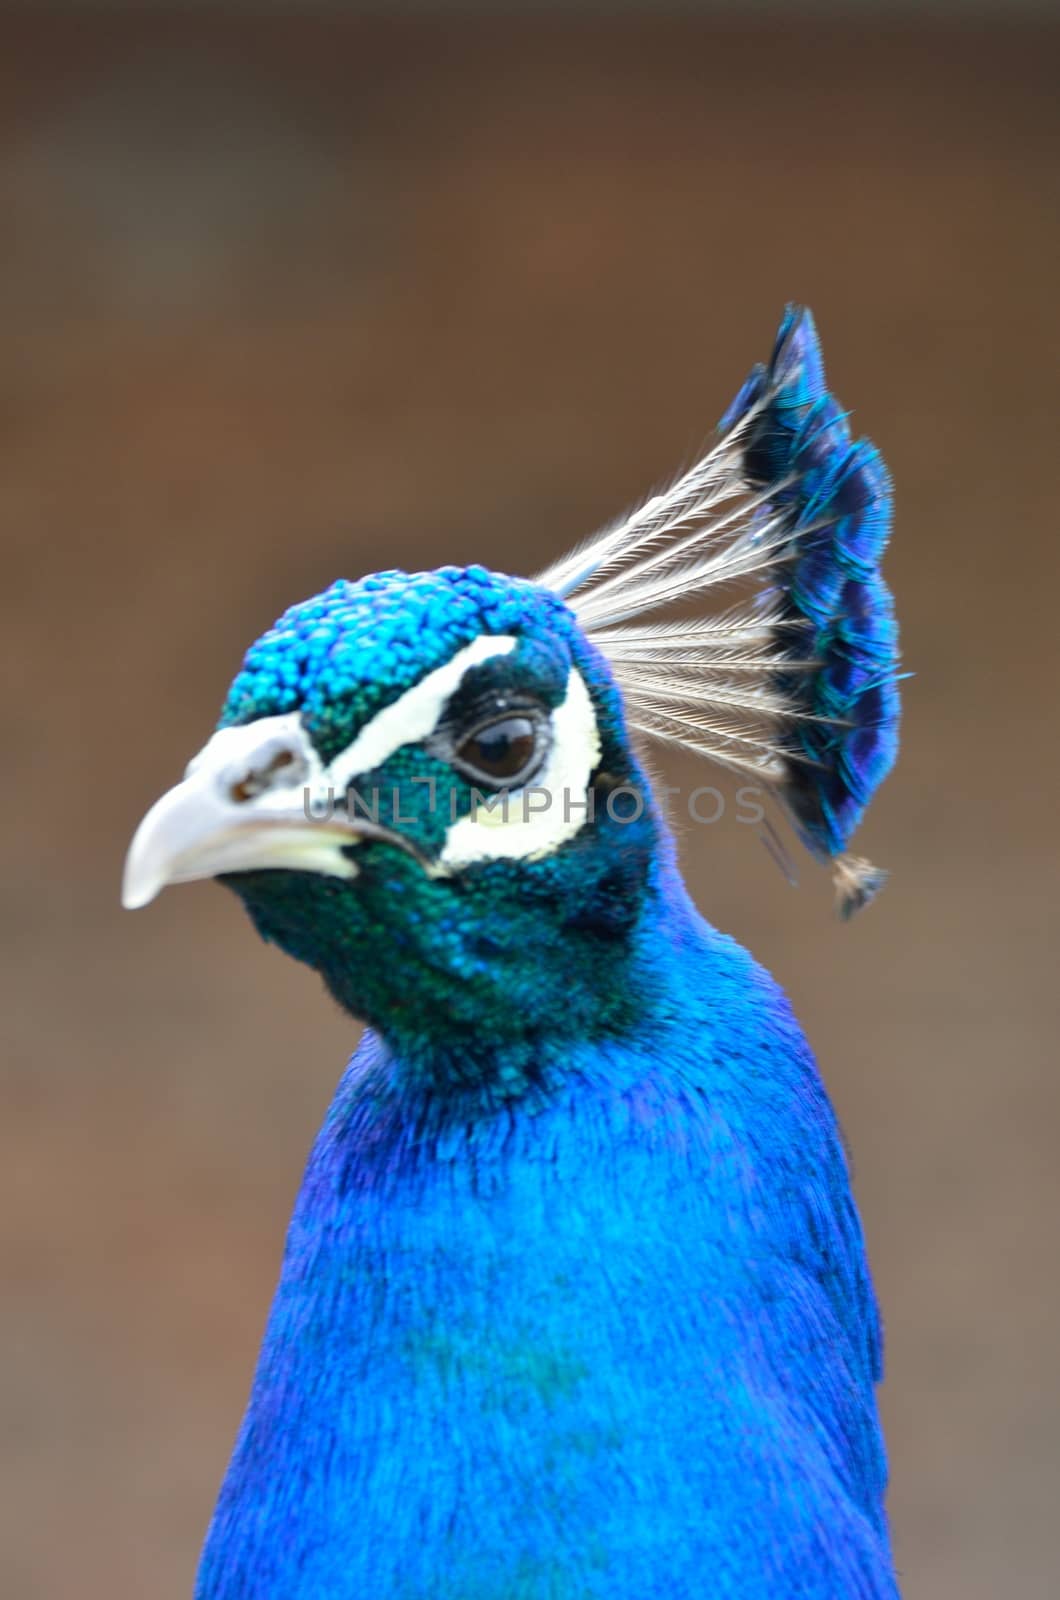 Blue head of peacock by pauws99